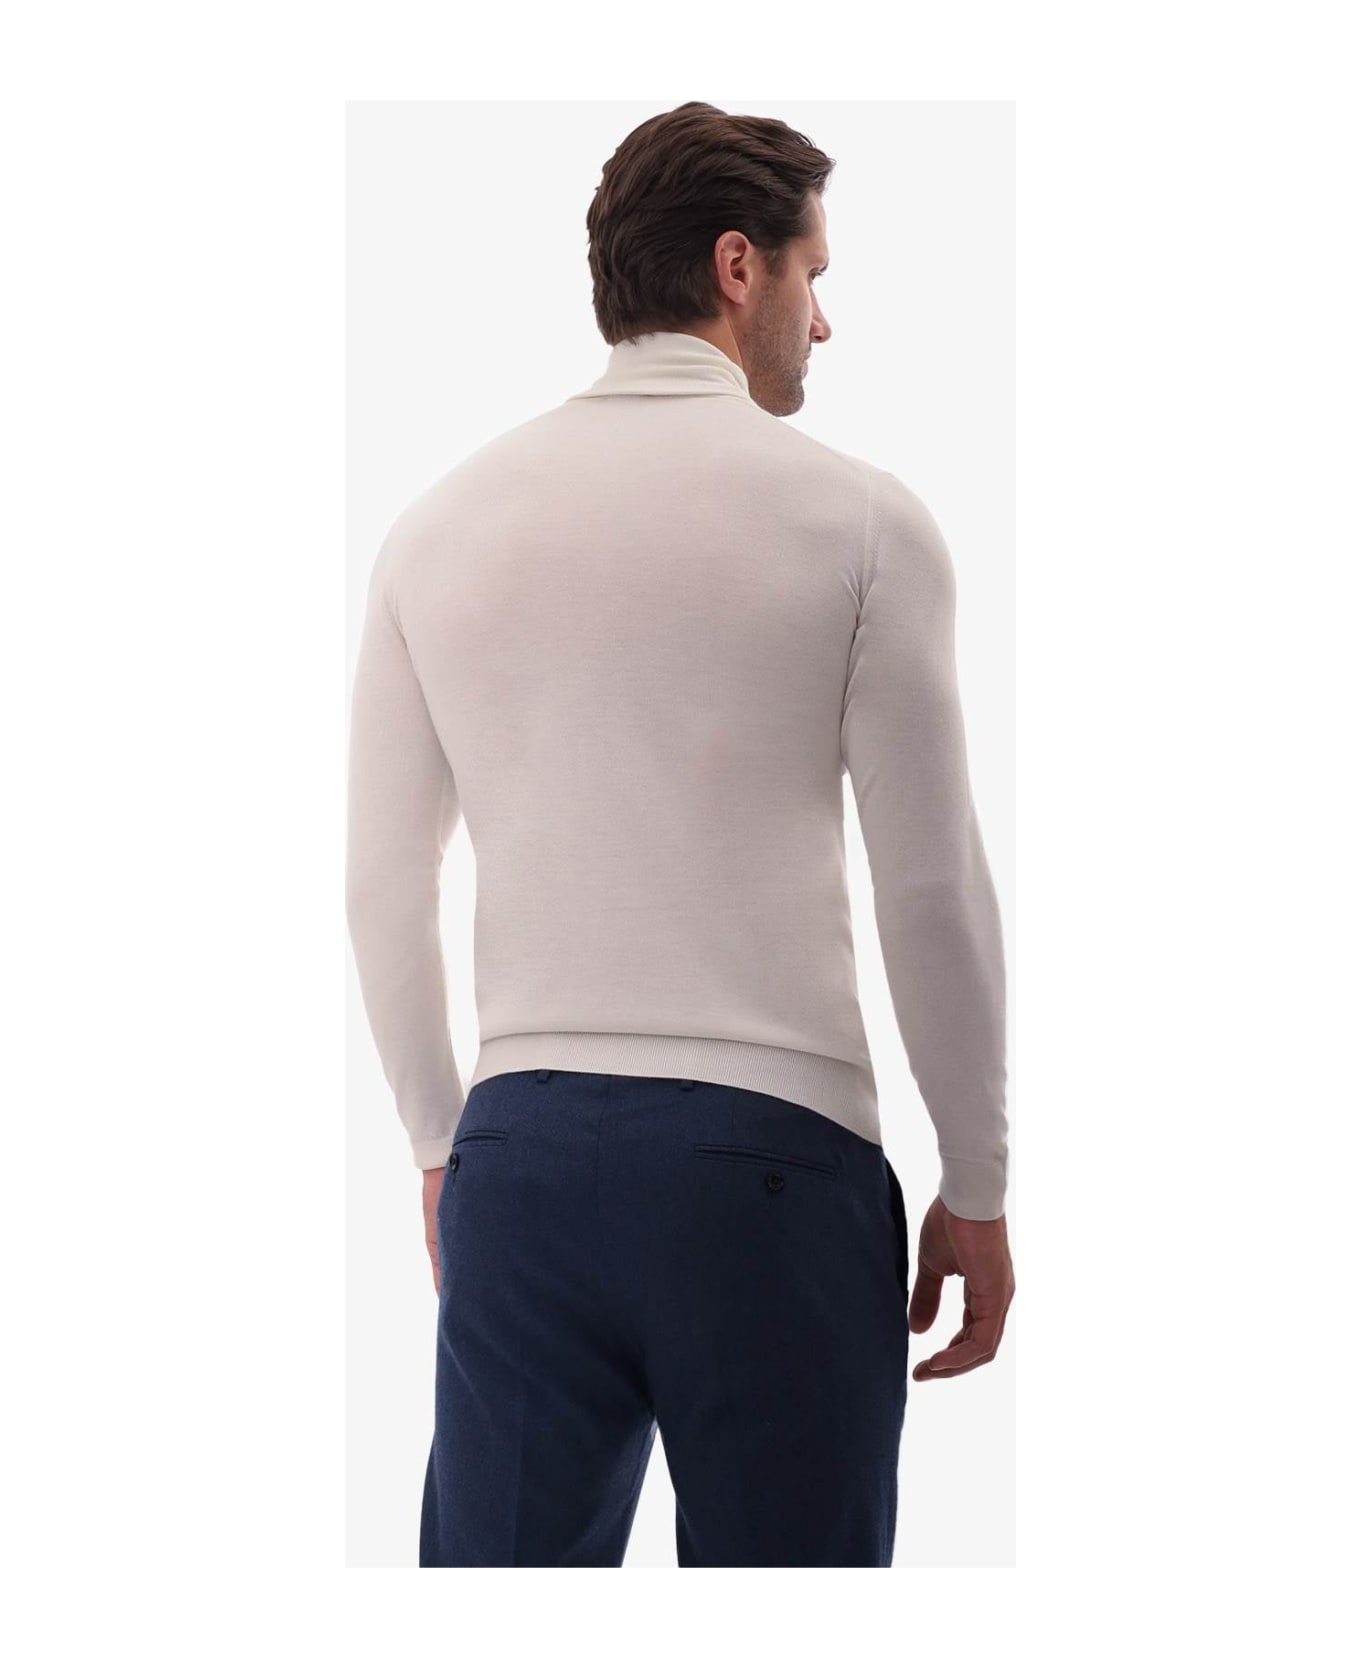 Larusmiani Turtleneck Sweater 'pullman' Sweater - White